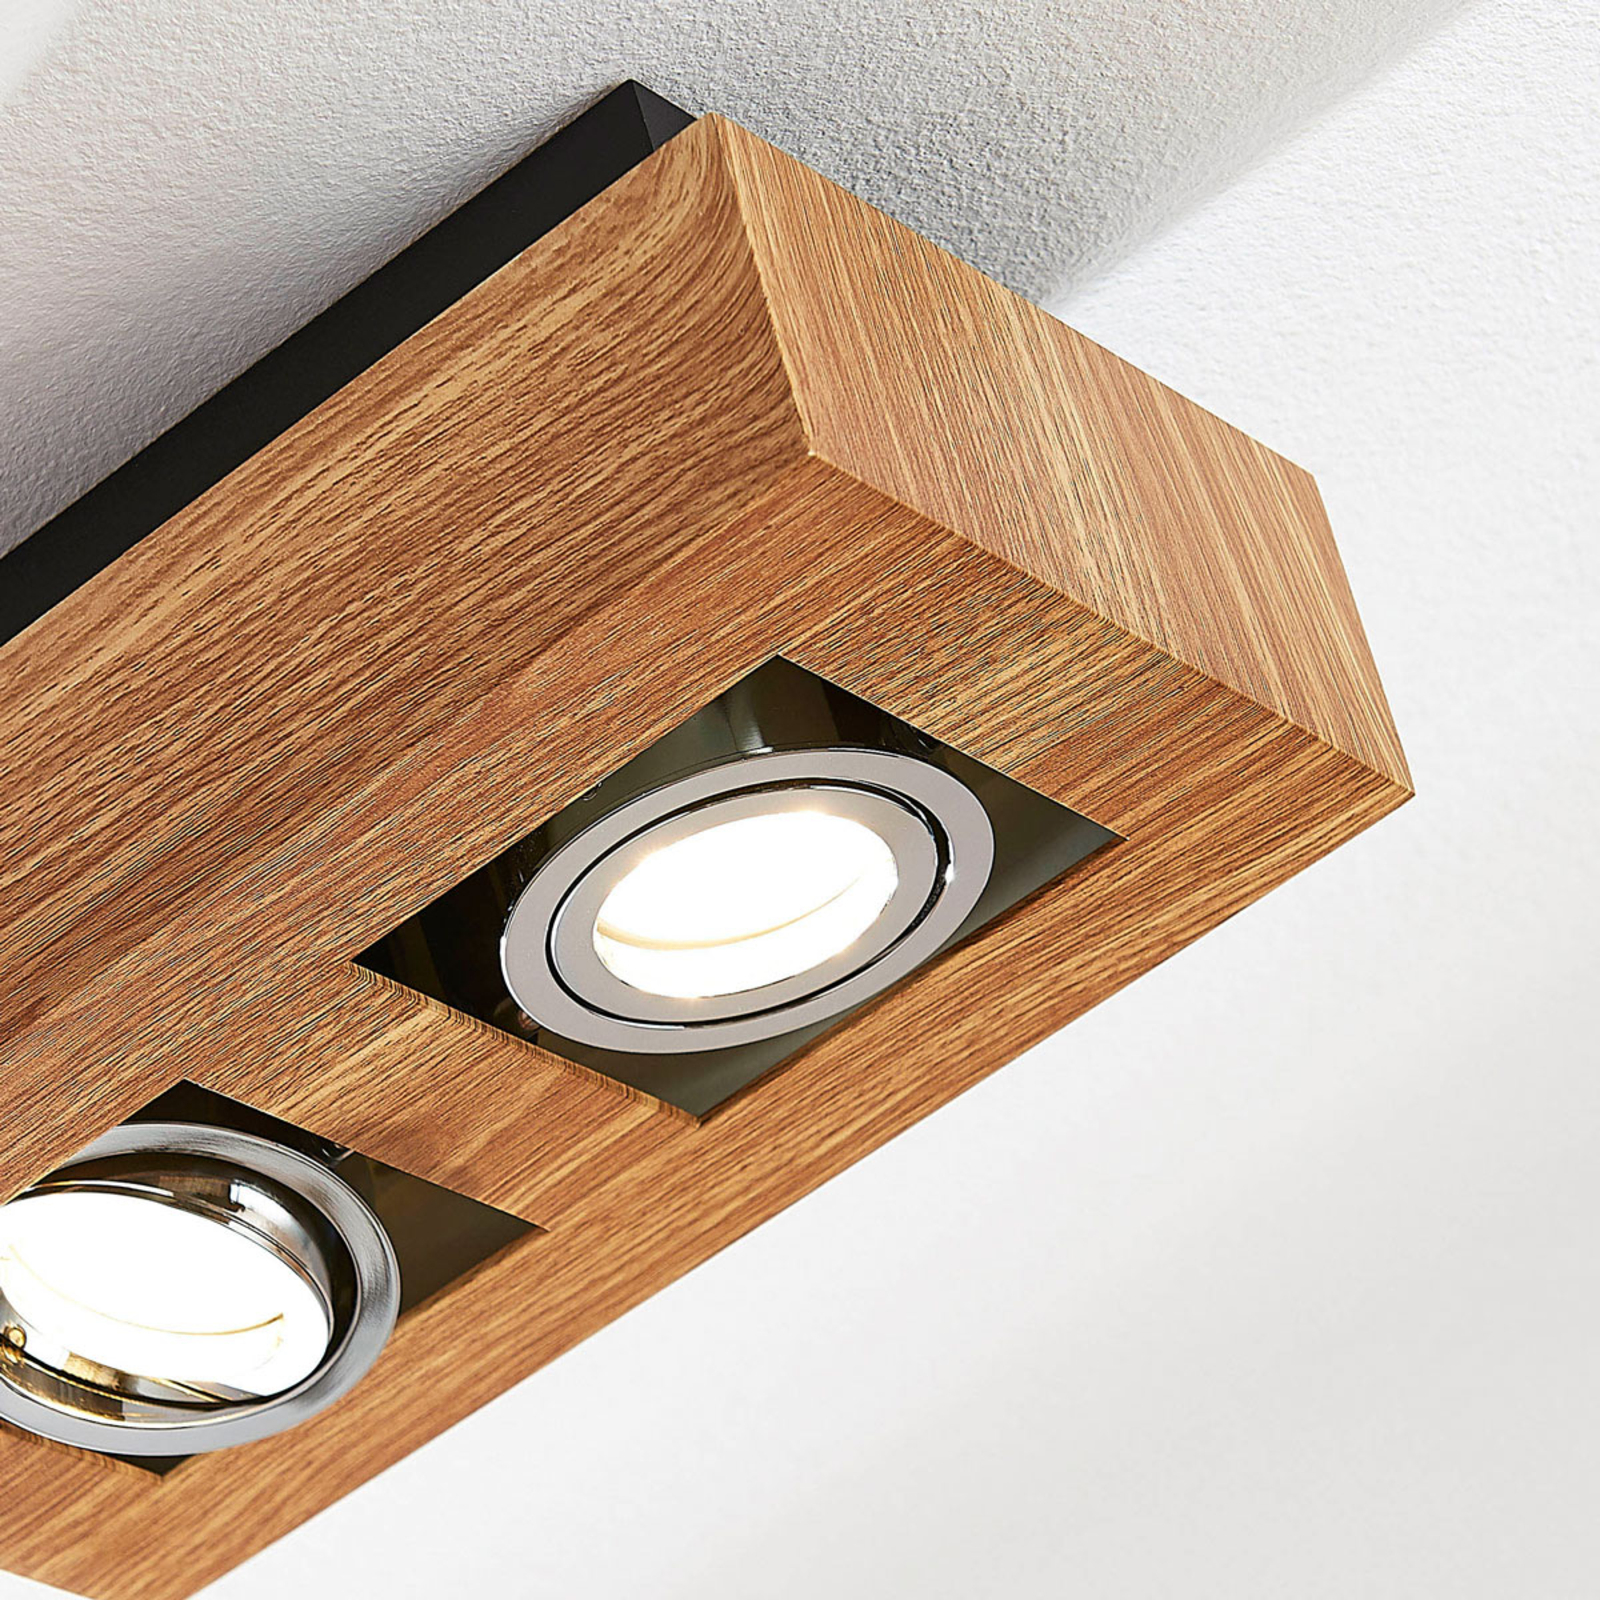 Vince LED ceiling light, 25 x 14 cm, wood look